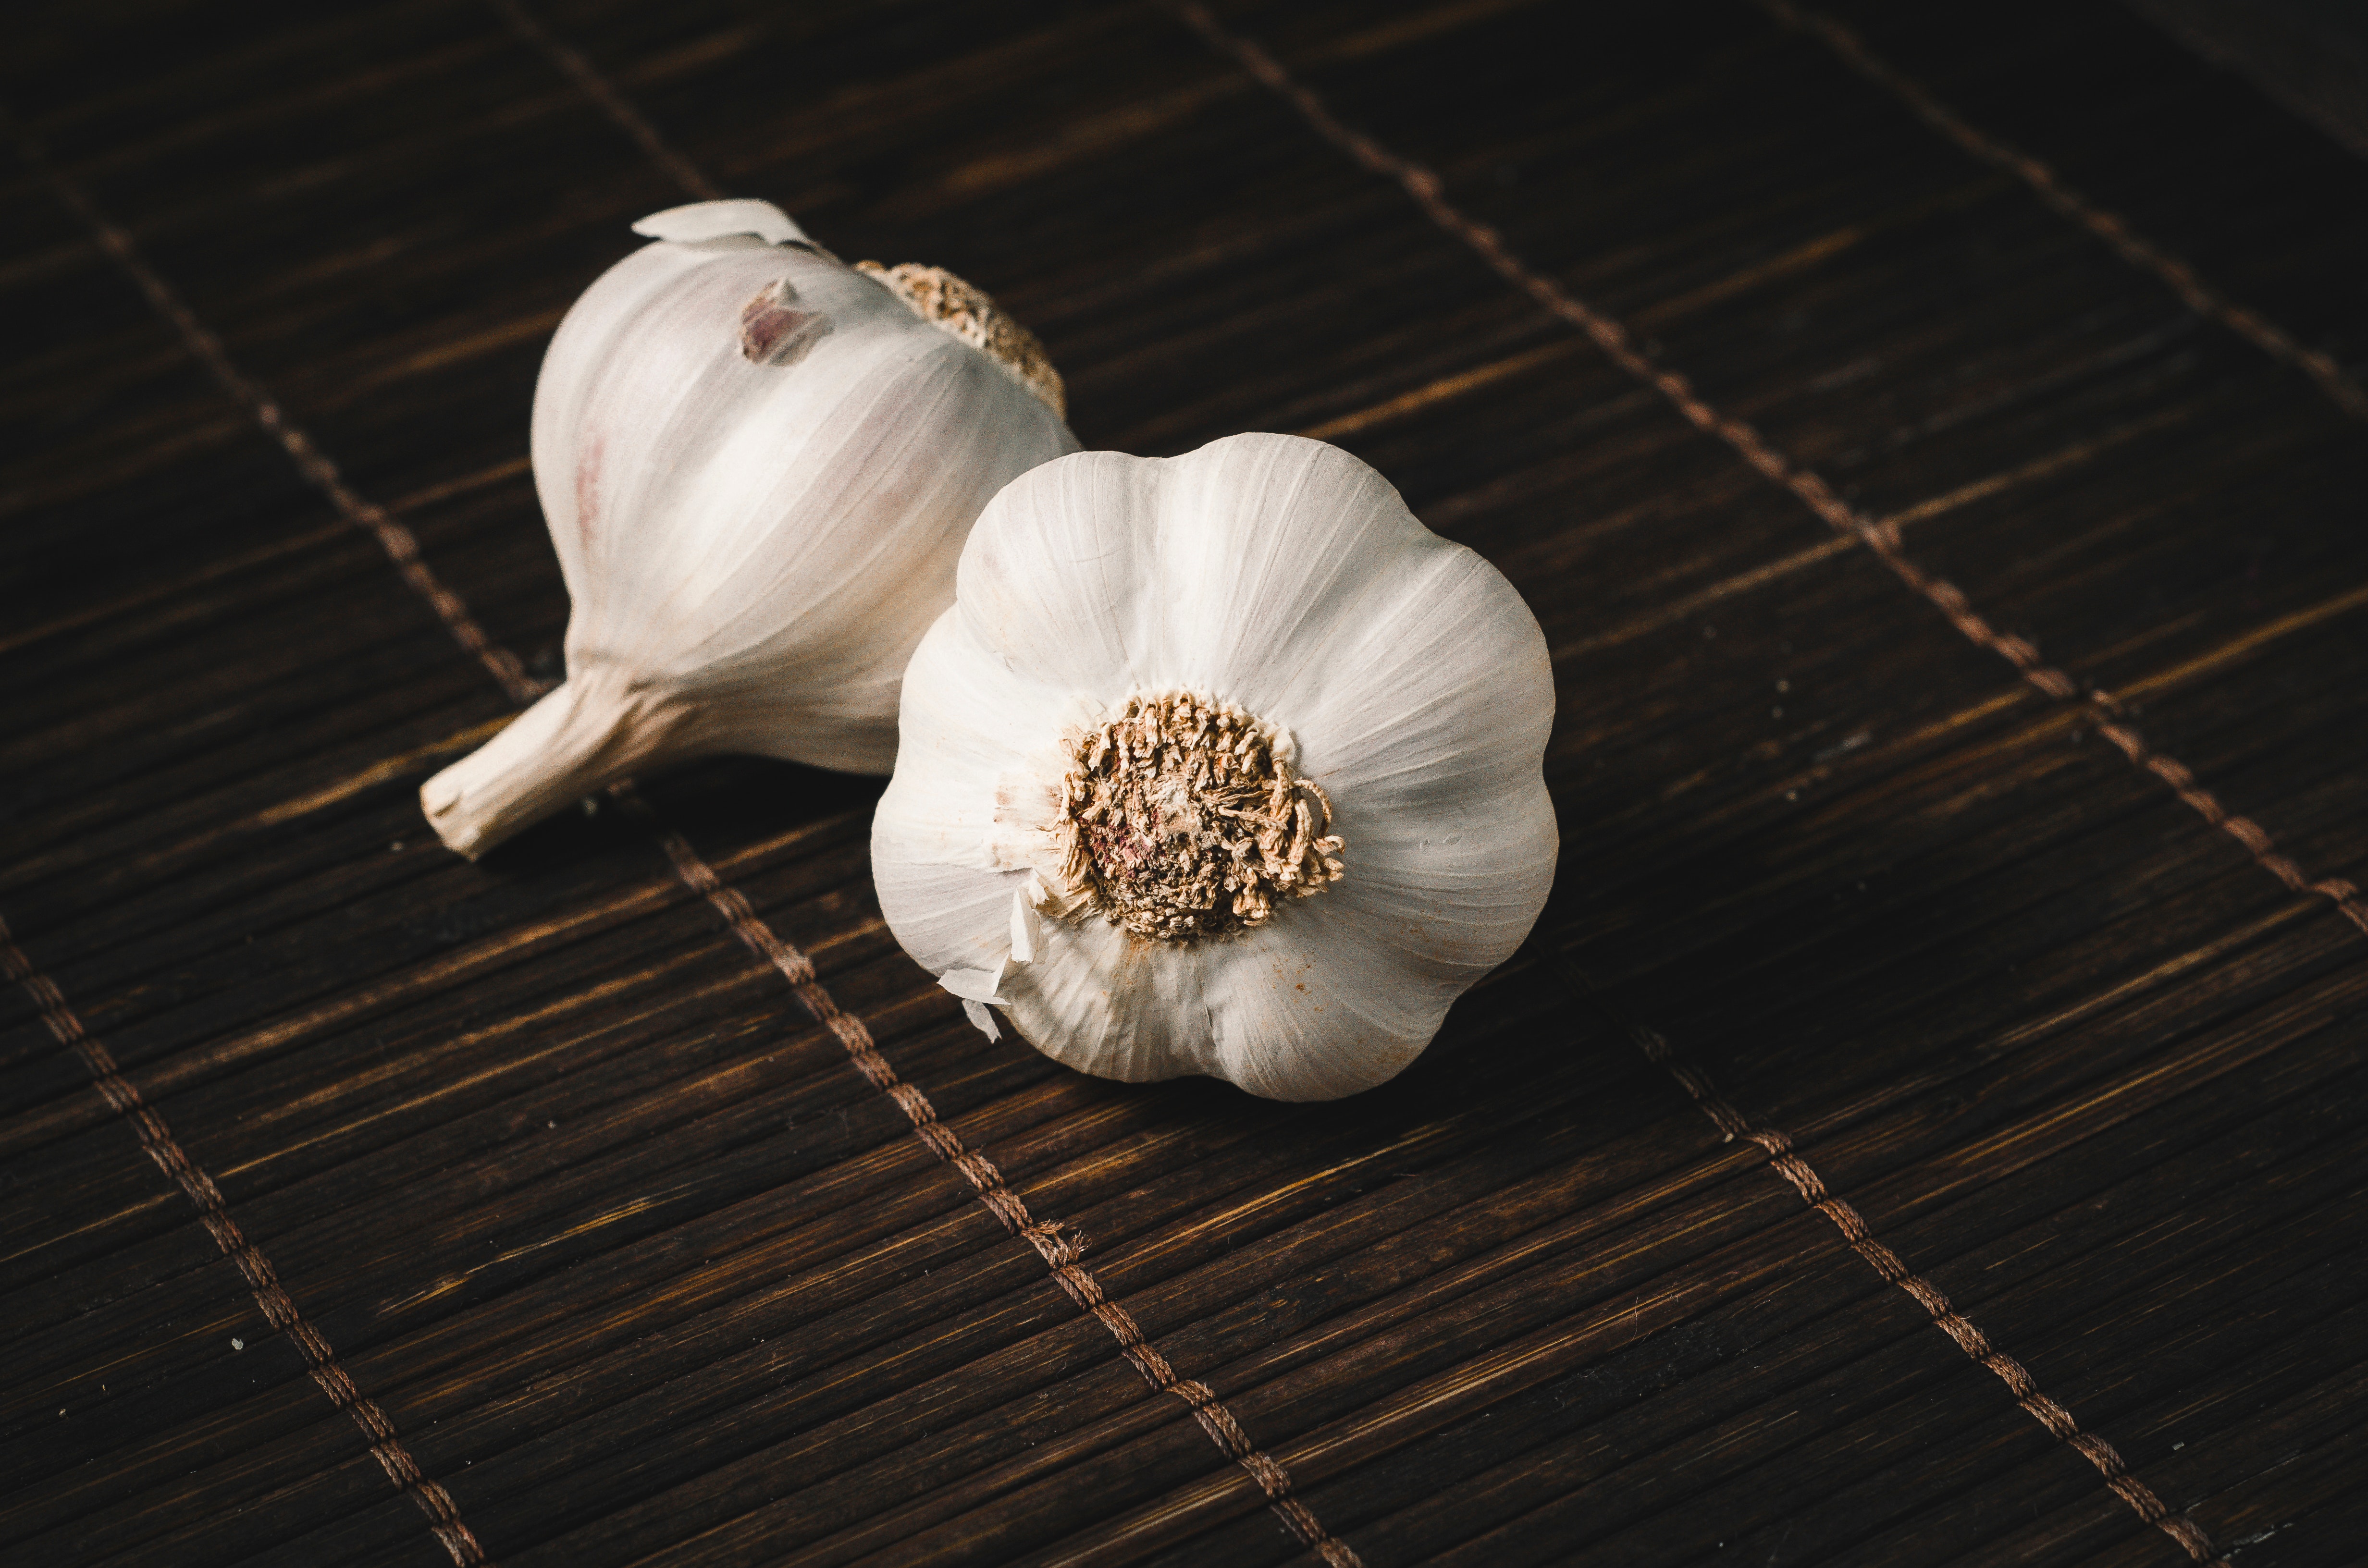 All Clad Garlic Press: Make Cooking Easier